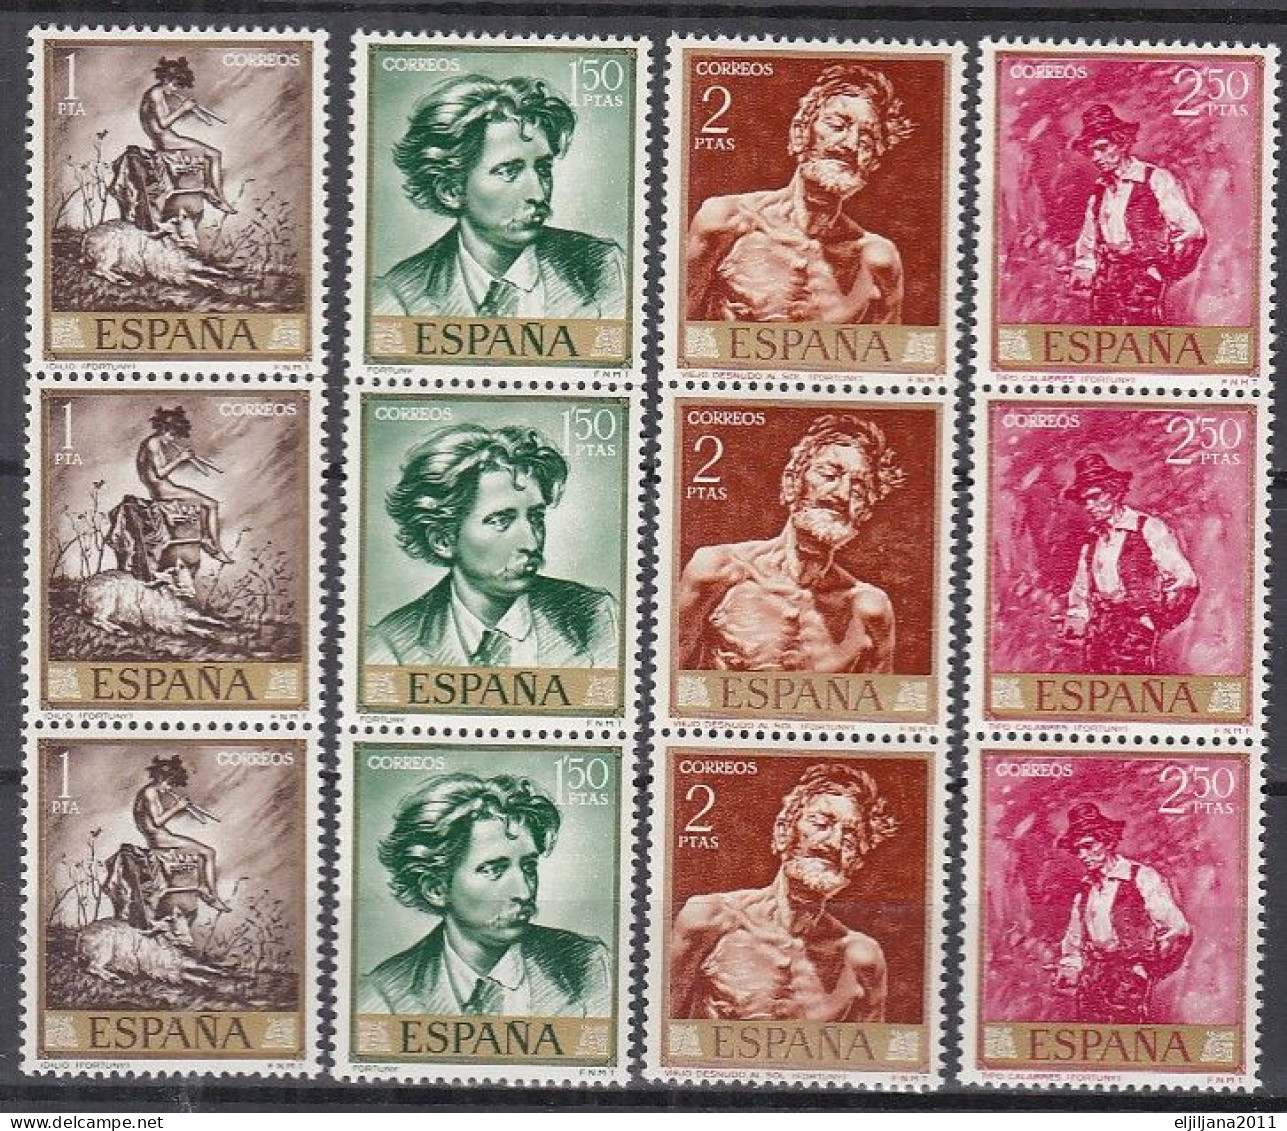 ⁕ SPAIN / ESPANA 1968 ⁕ Mariano Fortuny (stamp Day) Art Painting Gemalde Mi.1740-1749 ⁕ MNH ( 43 Stamps ) - Nuovi